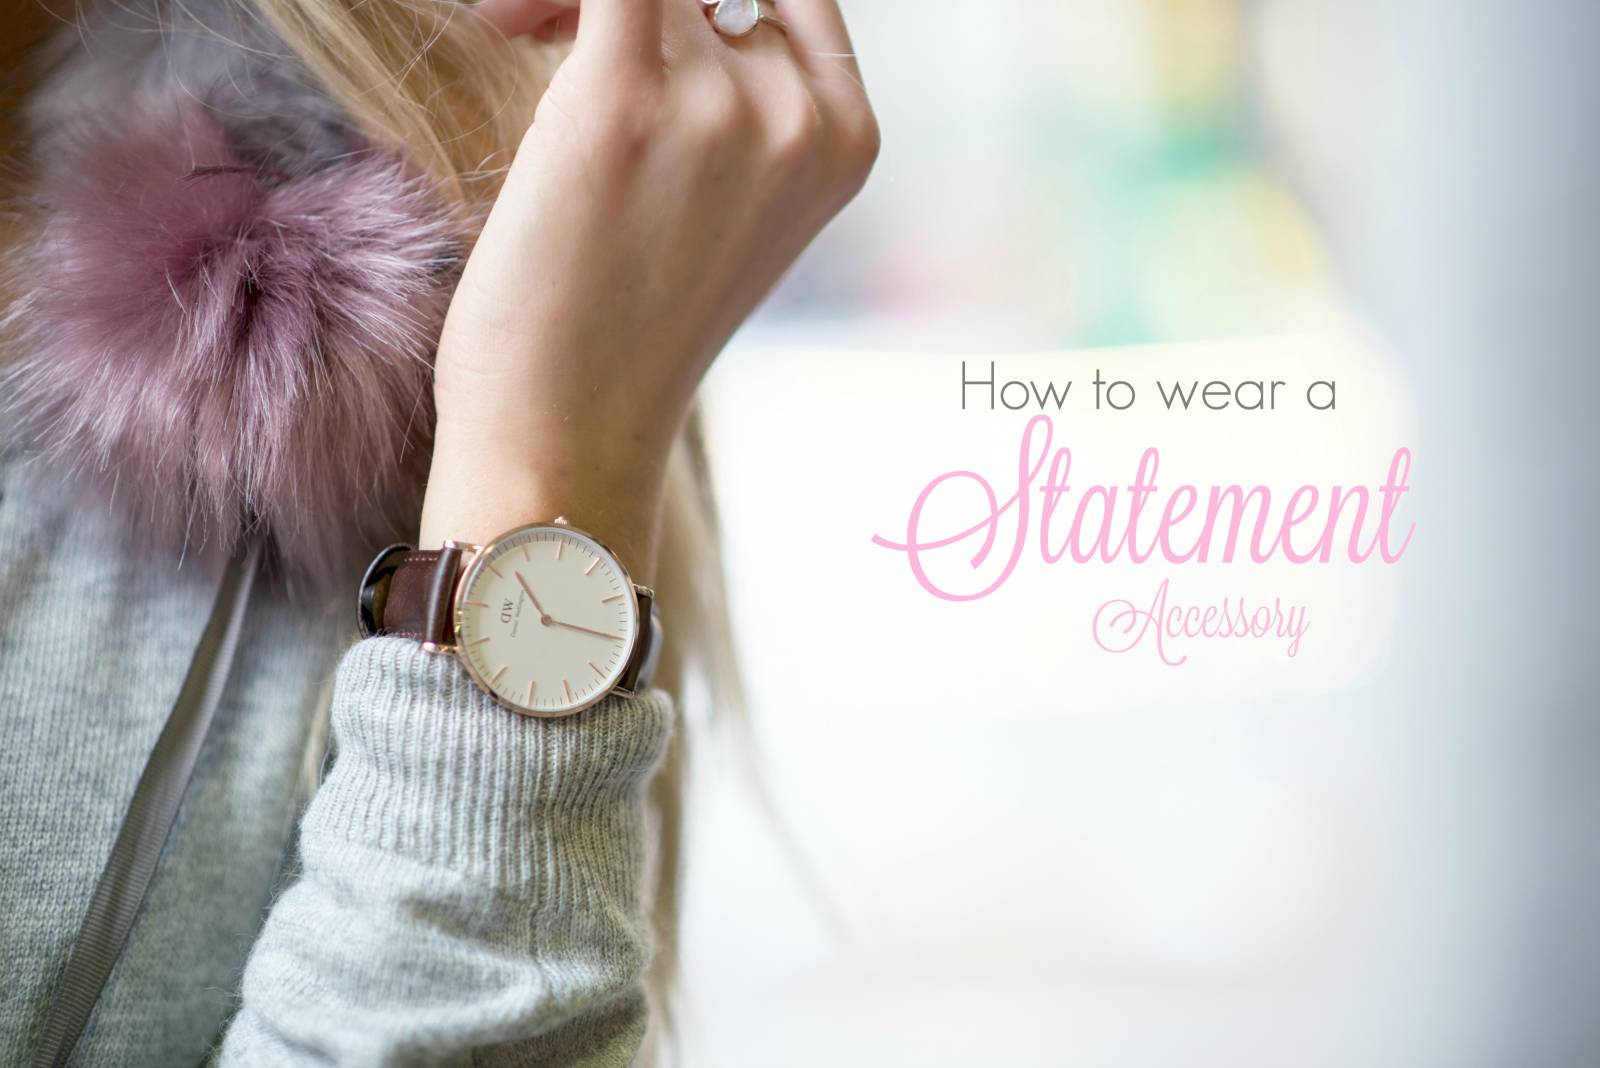 How To Wear a Statement Accessory - daniel wellington watch title